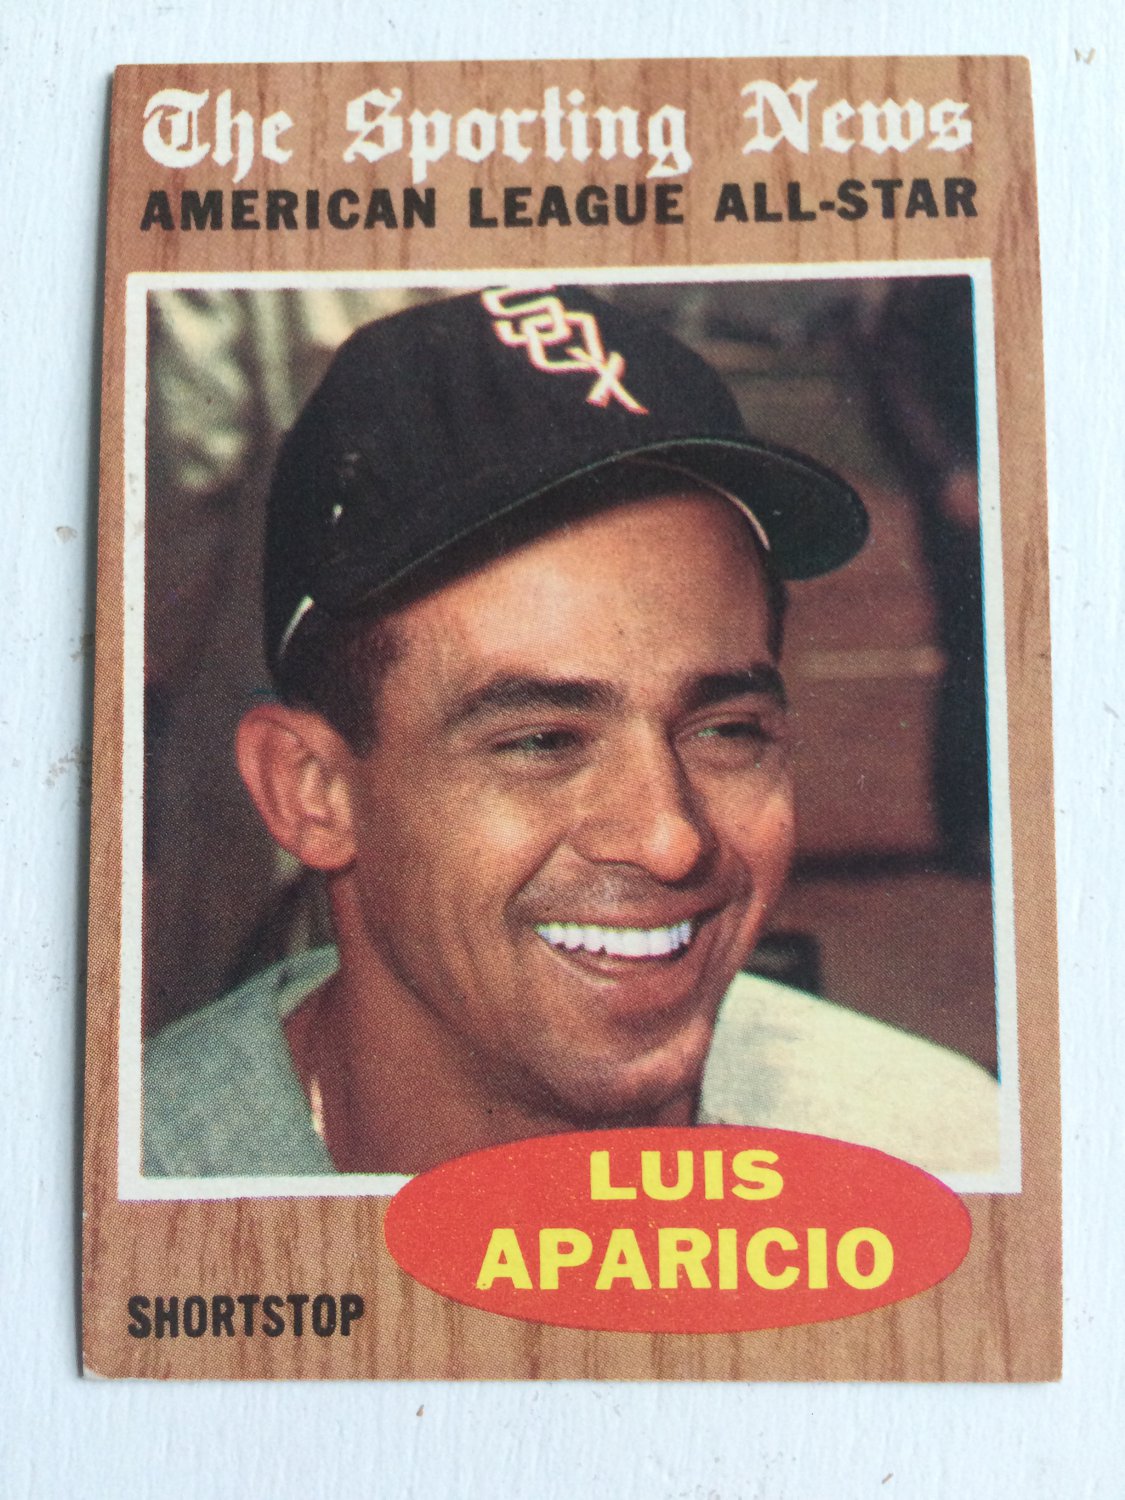 1962 Topps Baseball Card #469 Luis Aparicio White Sox